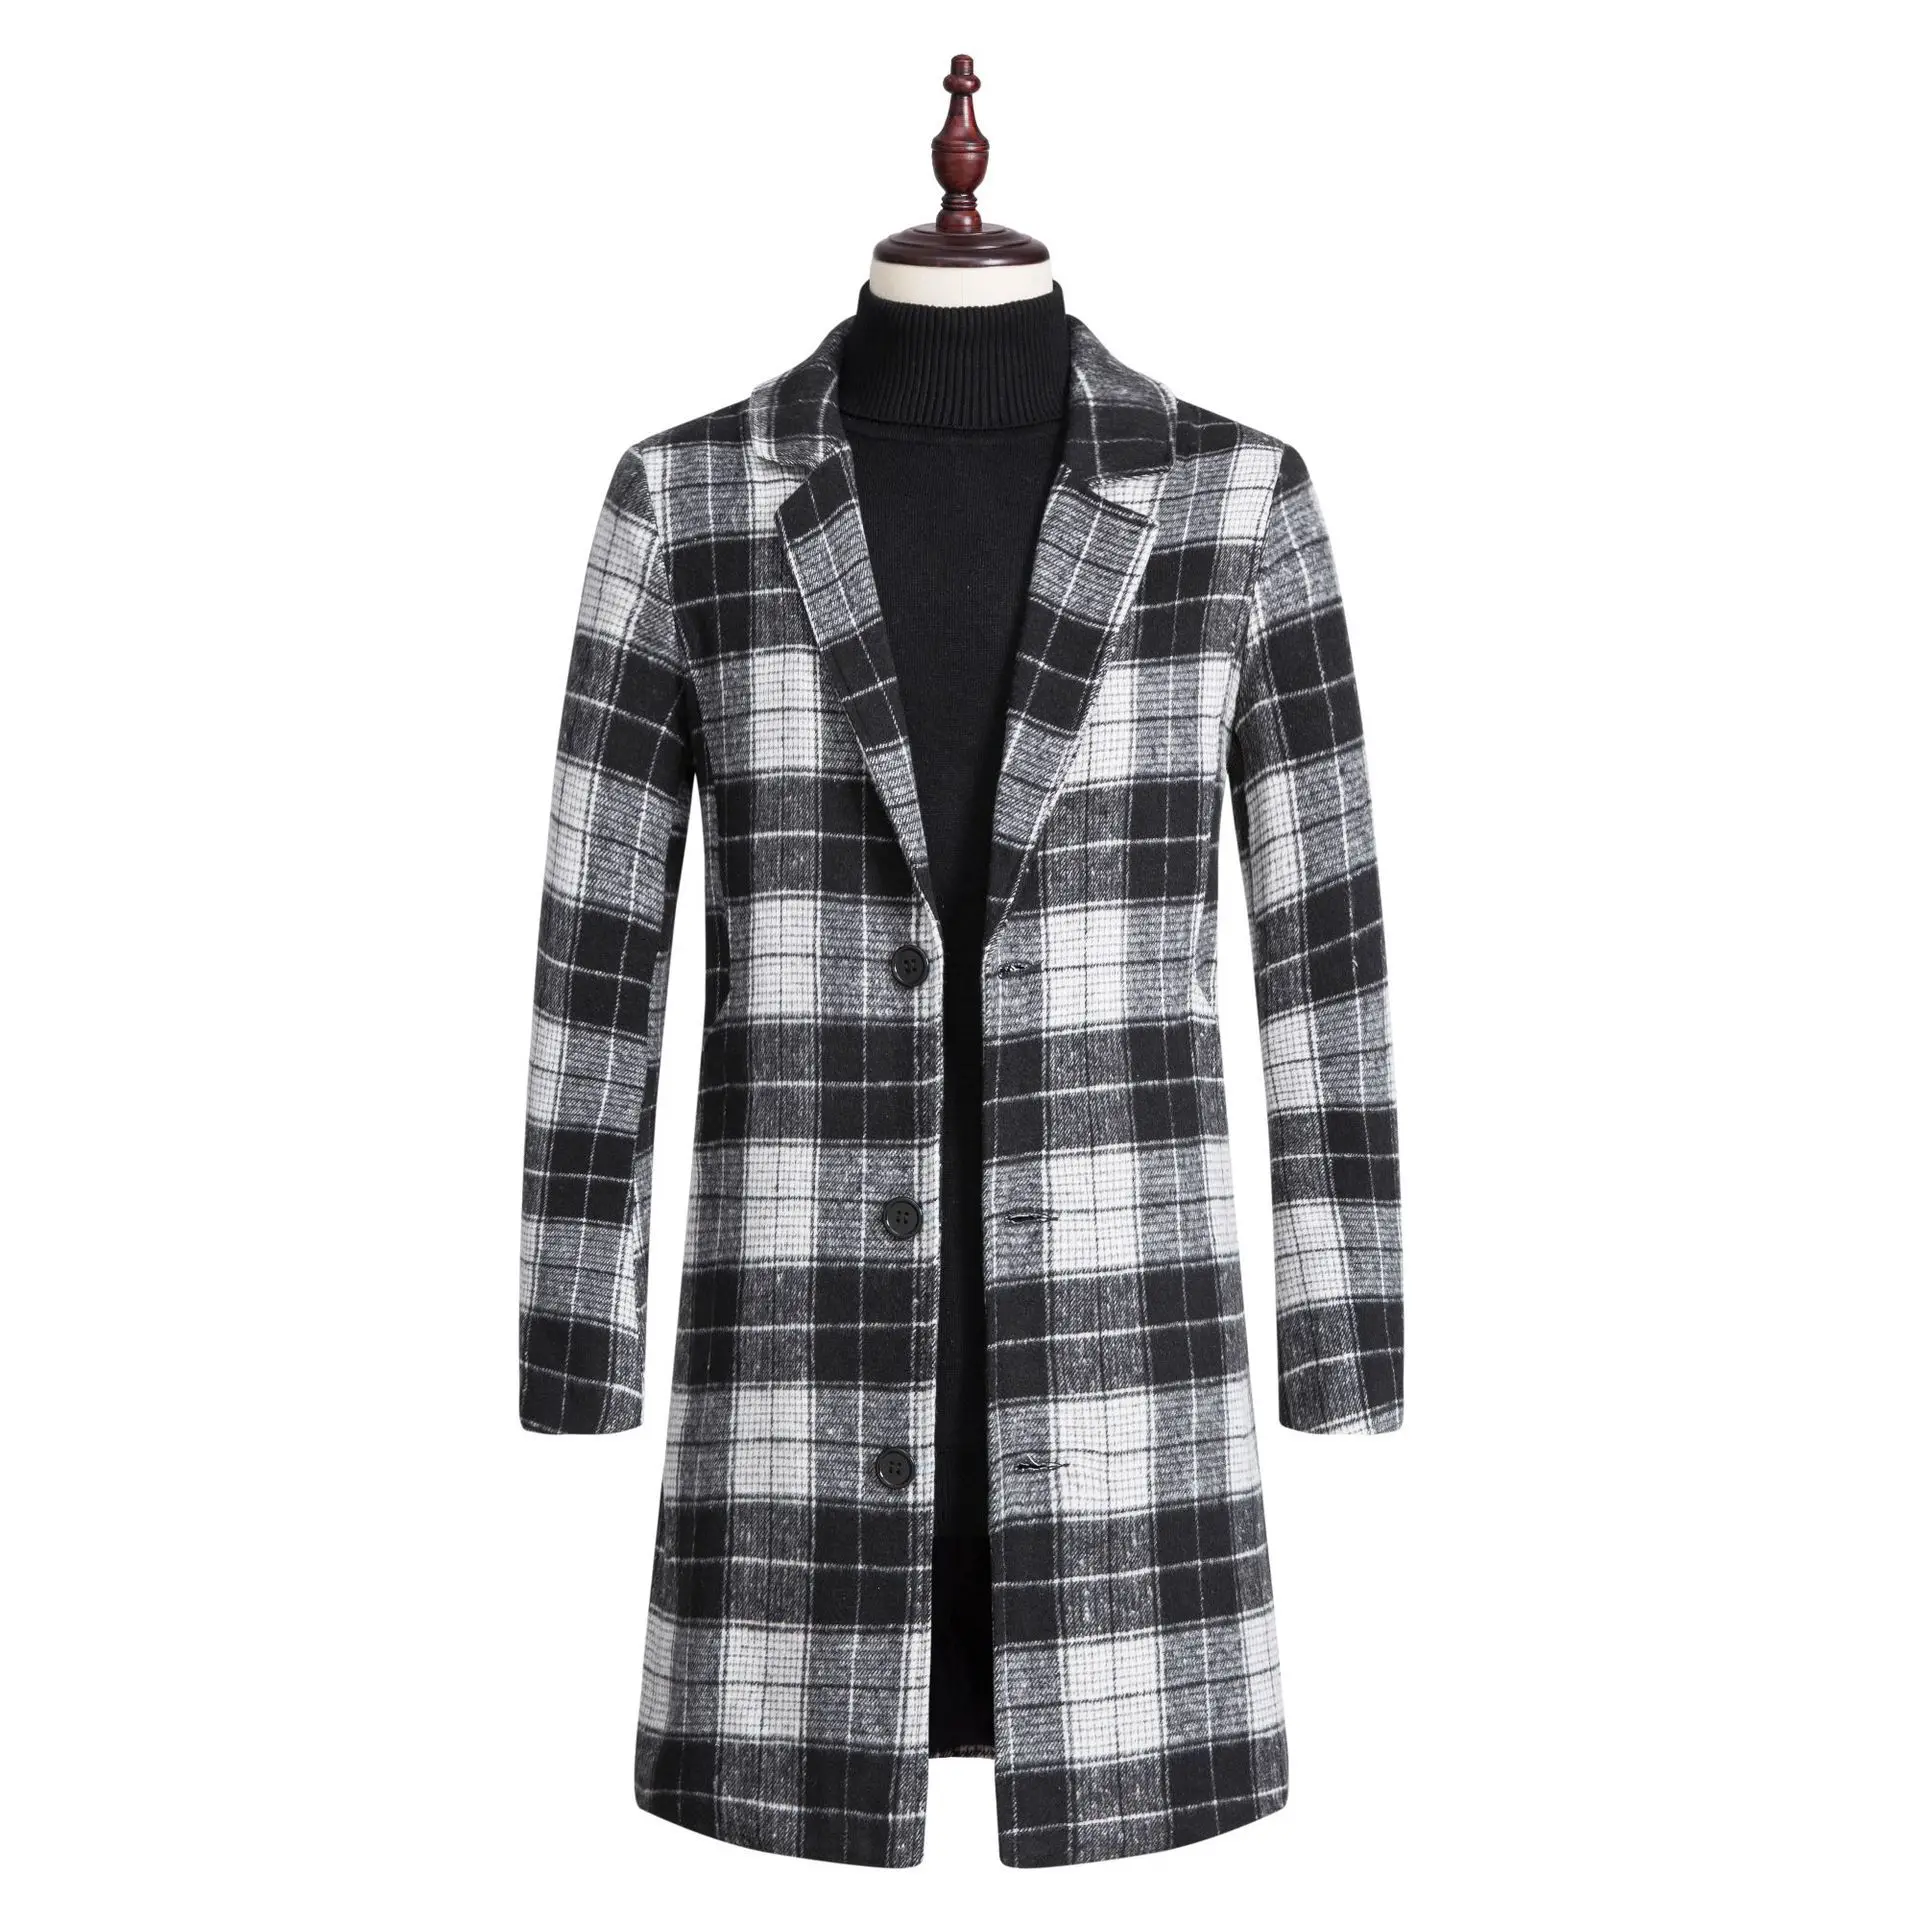 2021 New Men's Stand Collar Windbreaker Mid-length Wool Coat Jacket Grid Pattern Notch Lapel Coat S-2XL